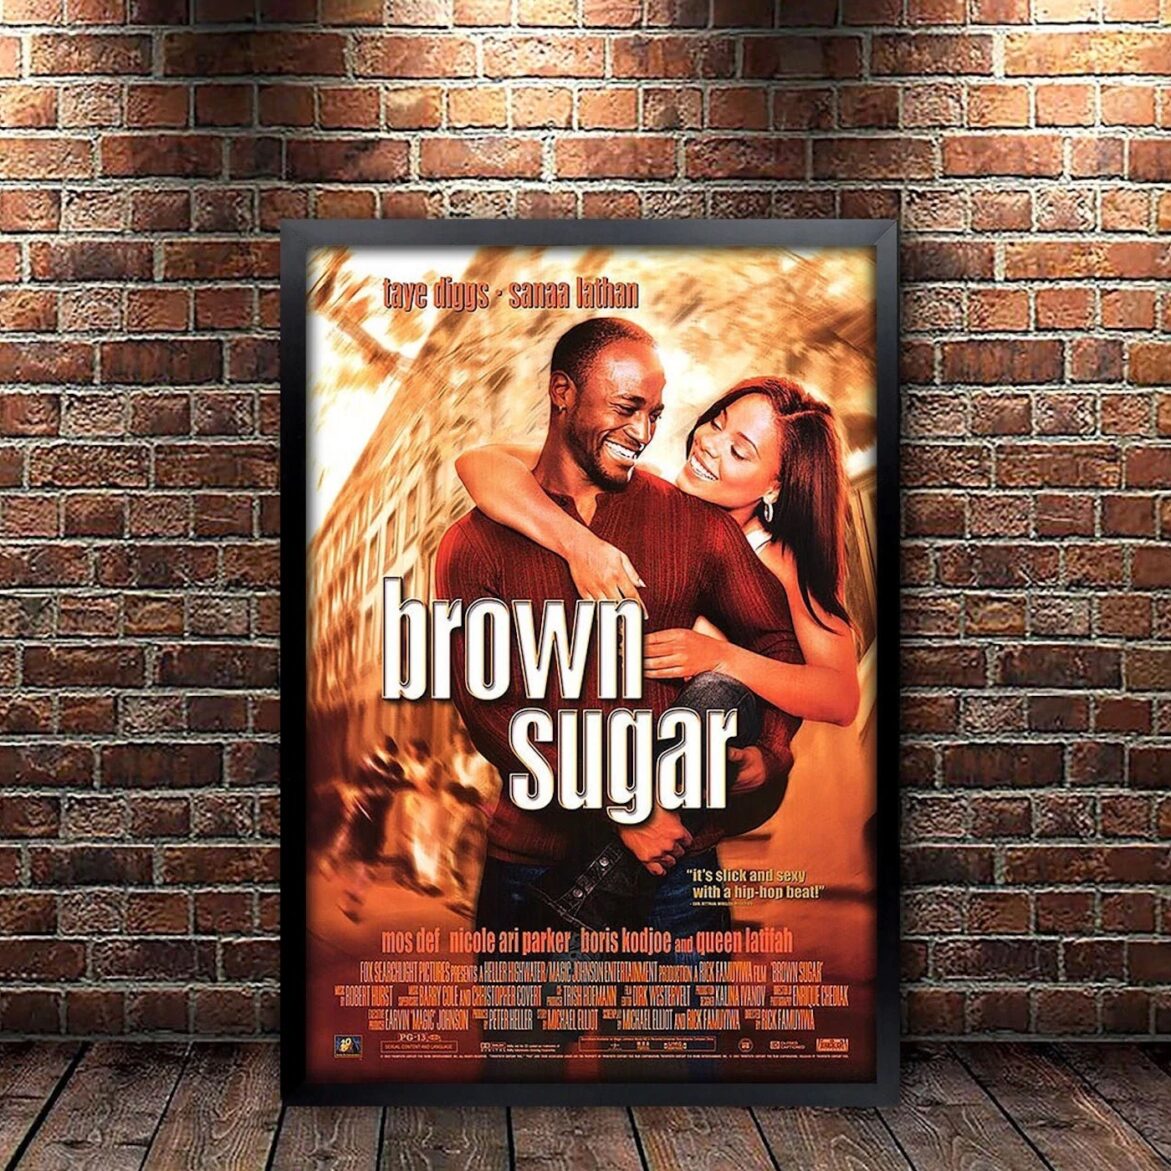 Black Podcasting - BONUS EPISODE! Pop Culture Corner! "Brown Sugar" at 20